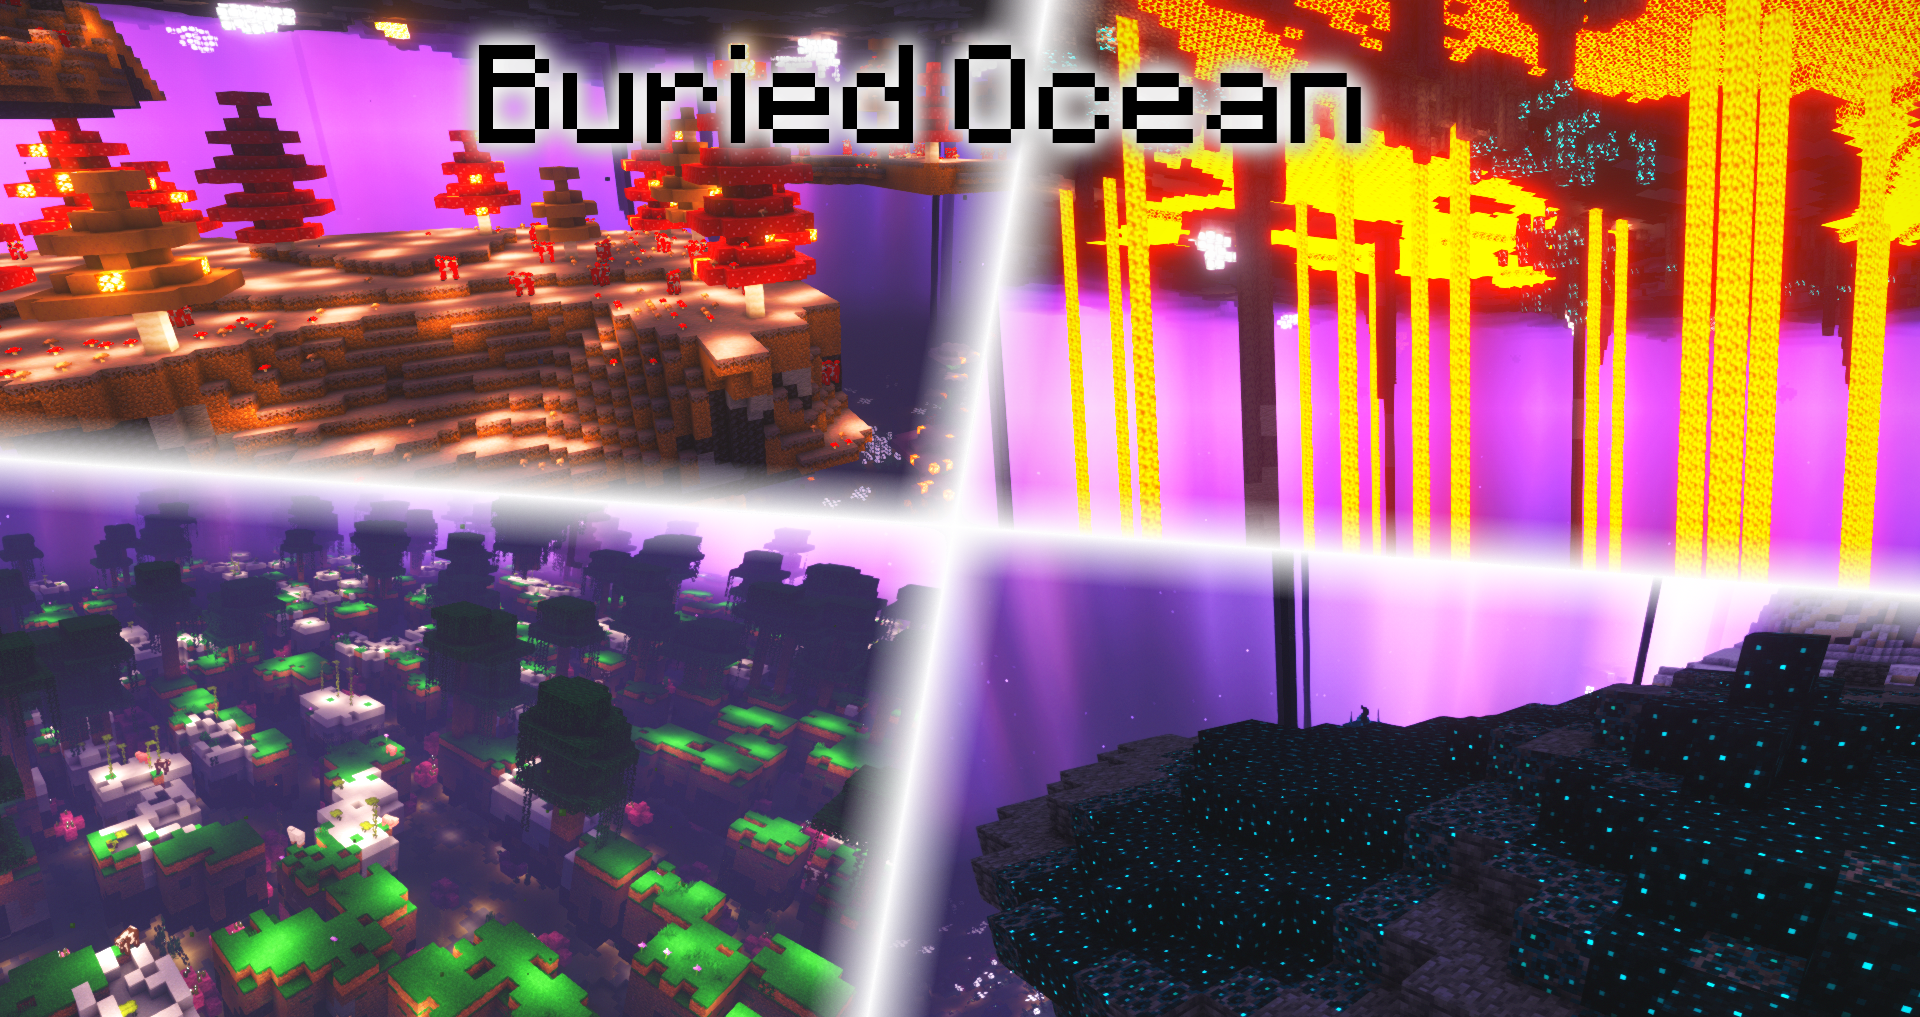 3. Buried Ocean Surface